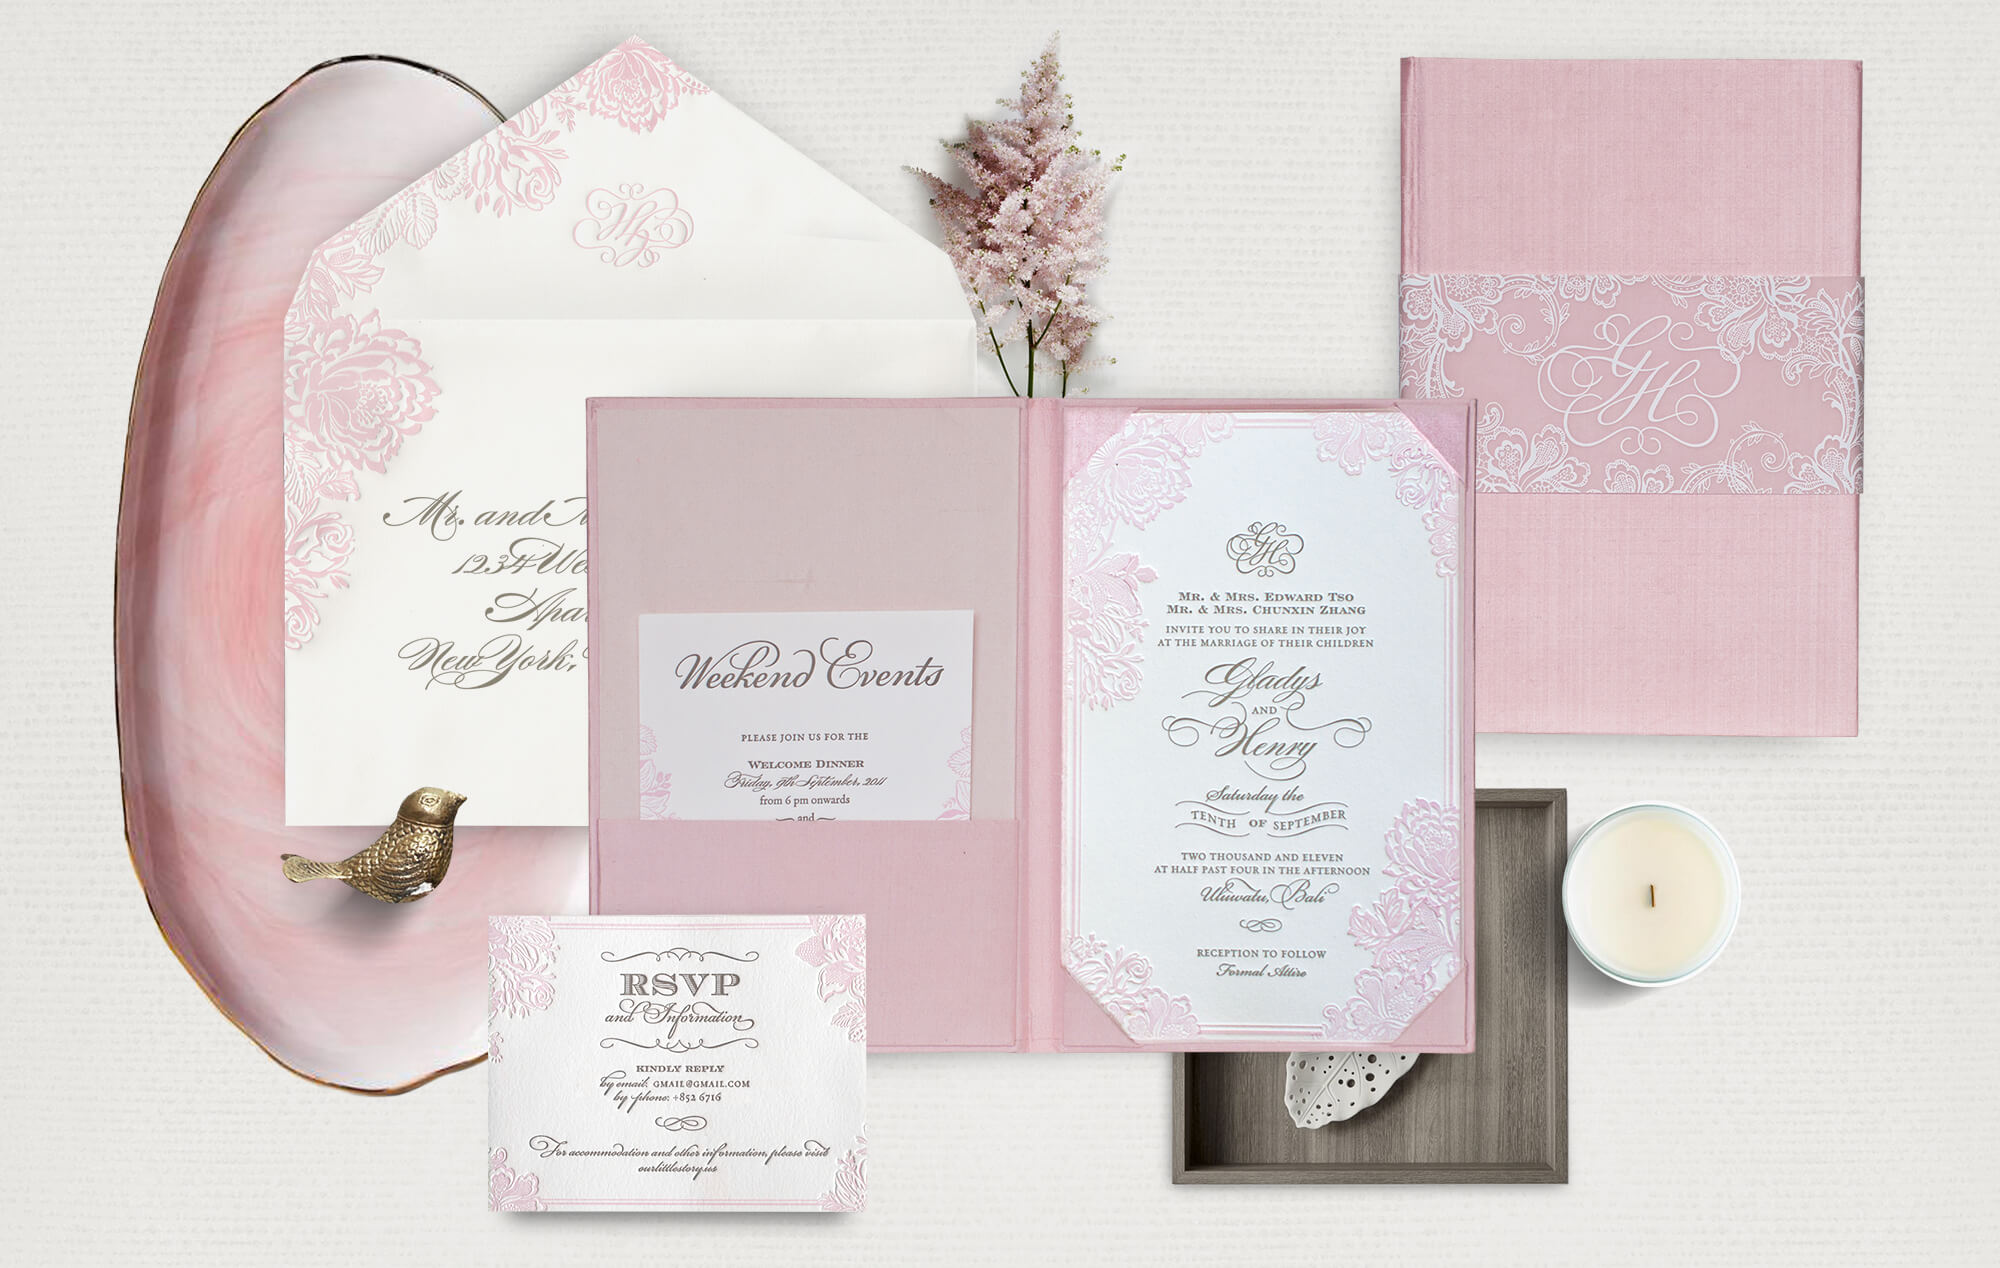 Blush pink invitation with a silk folder